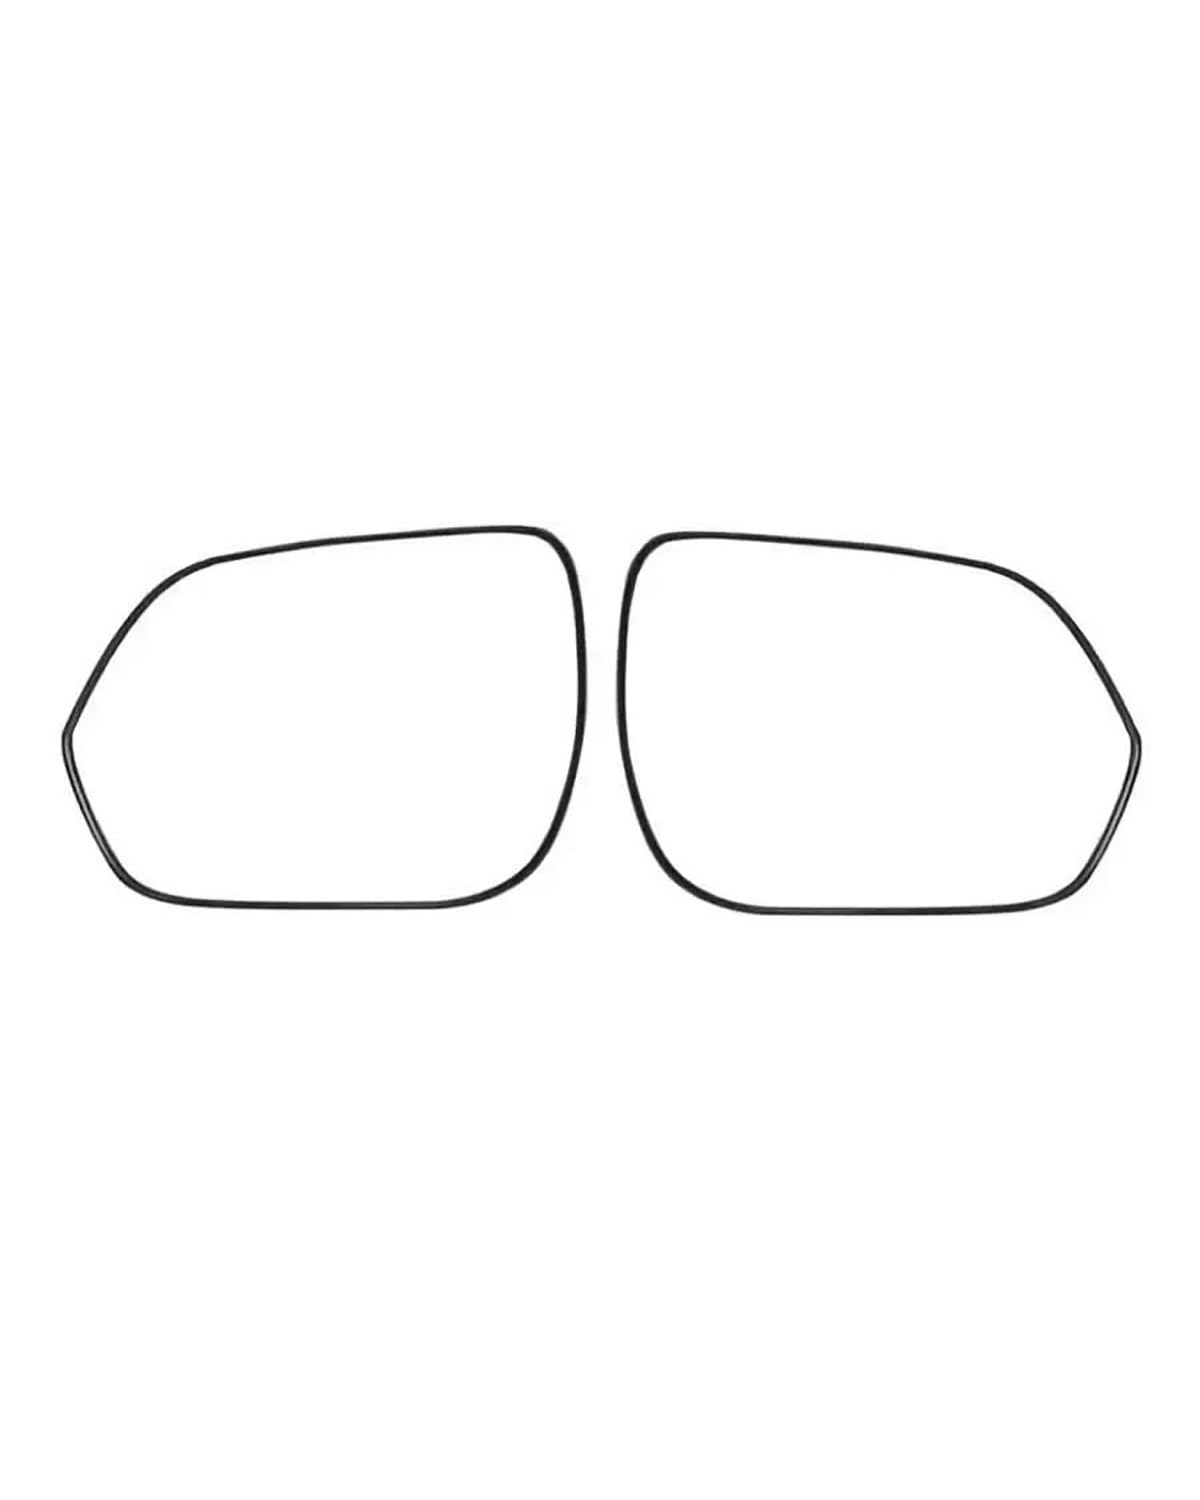 Umkehrlinse Rückfahrglas Spiegel Für Kia KX3 Für Seltos 2020 2021 2022 Autozubehör Äußere Rückspiegel Außenspiegel Linse Türflügel Rückspiegelglas Außenspiegel Gla(A pair heating) von MLLNPP